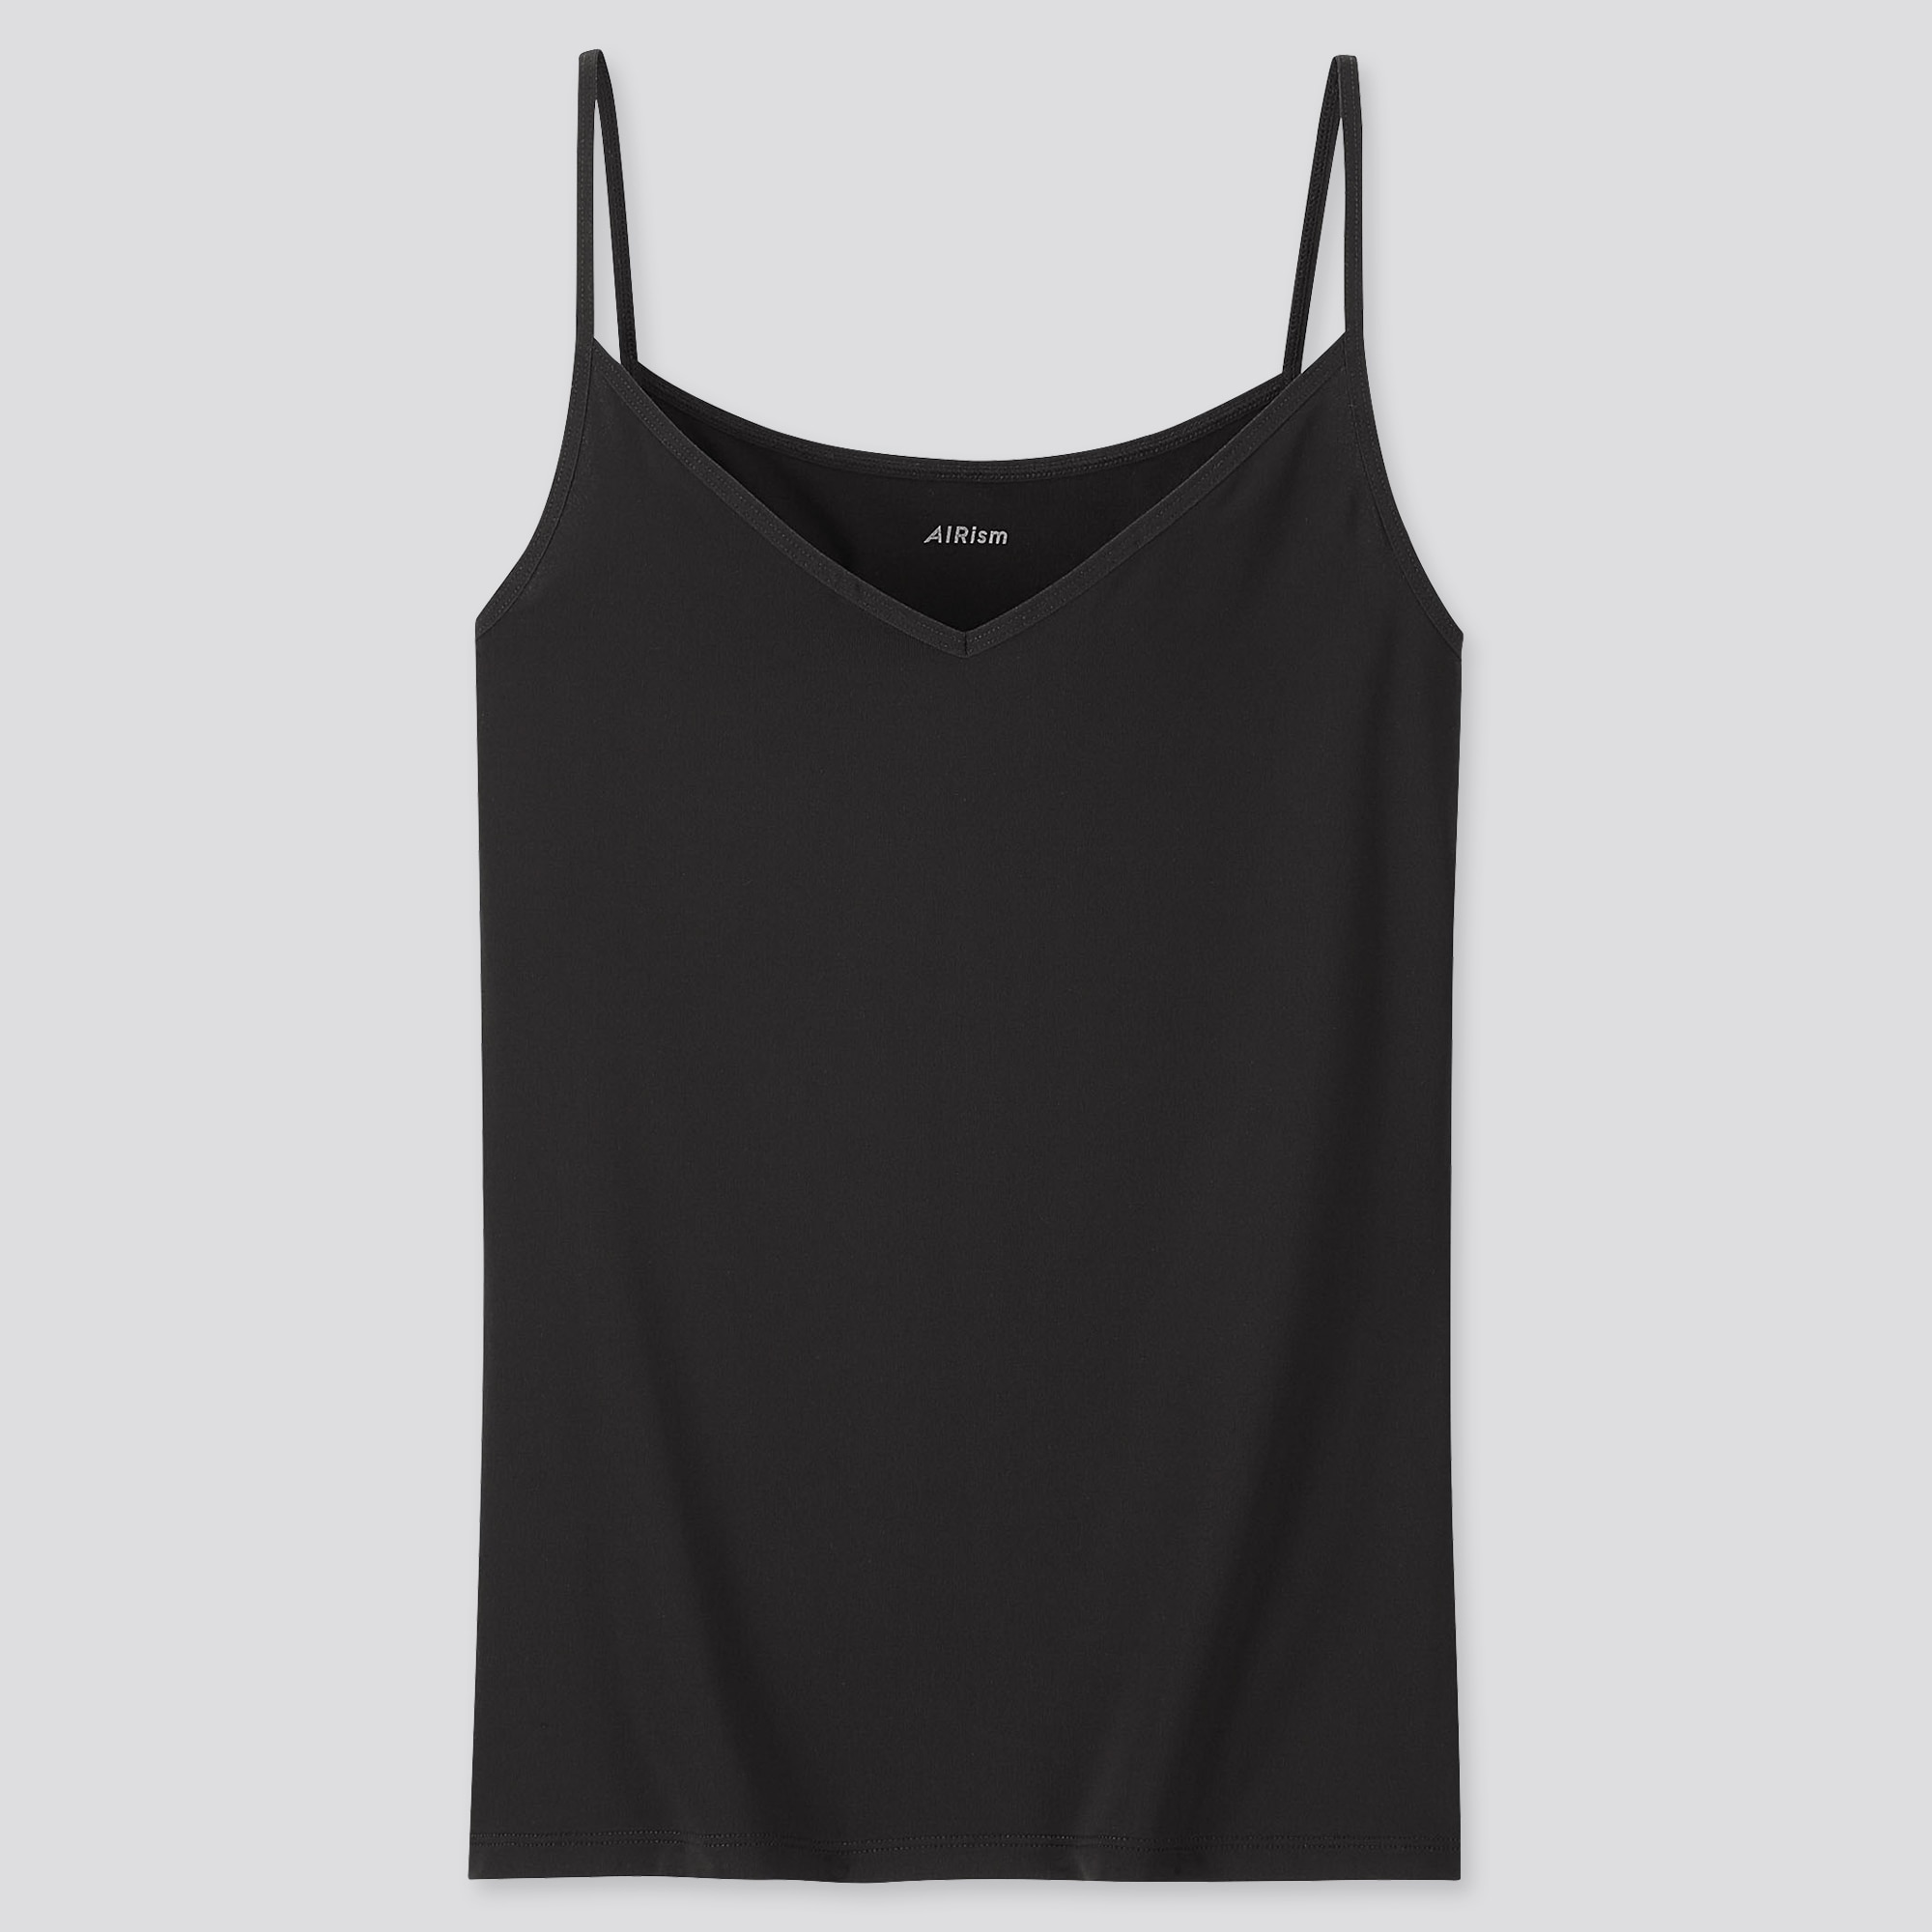 12 WOMEN UNIQLO Airism Camisole Cami Tank Top Shirt LOT Felina Calvin Klein  XS S $49.99 - PicClick